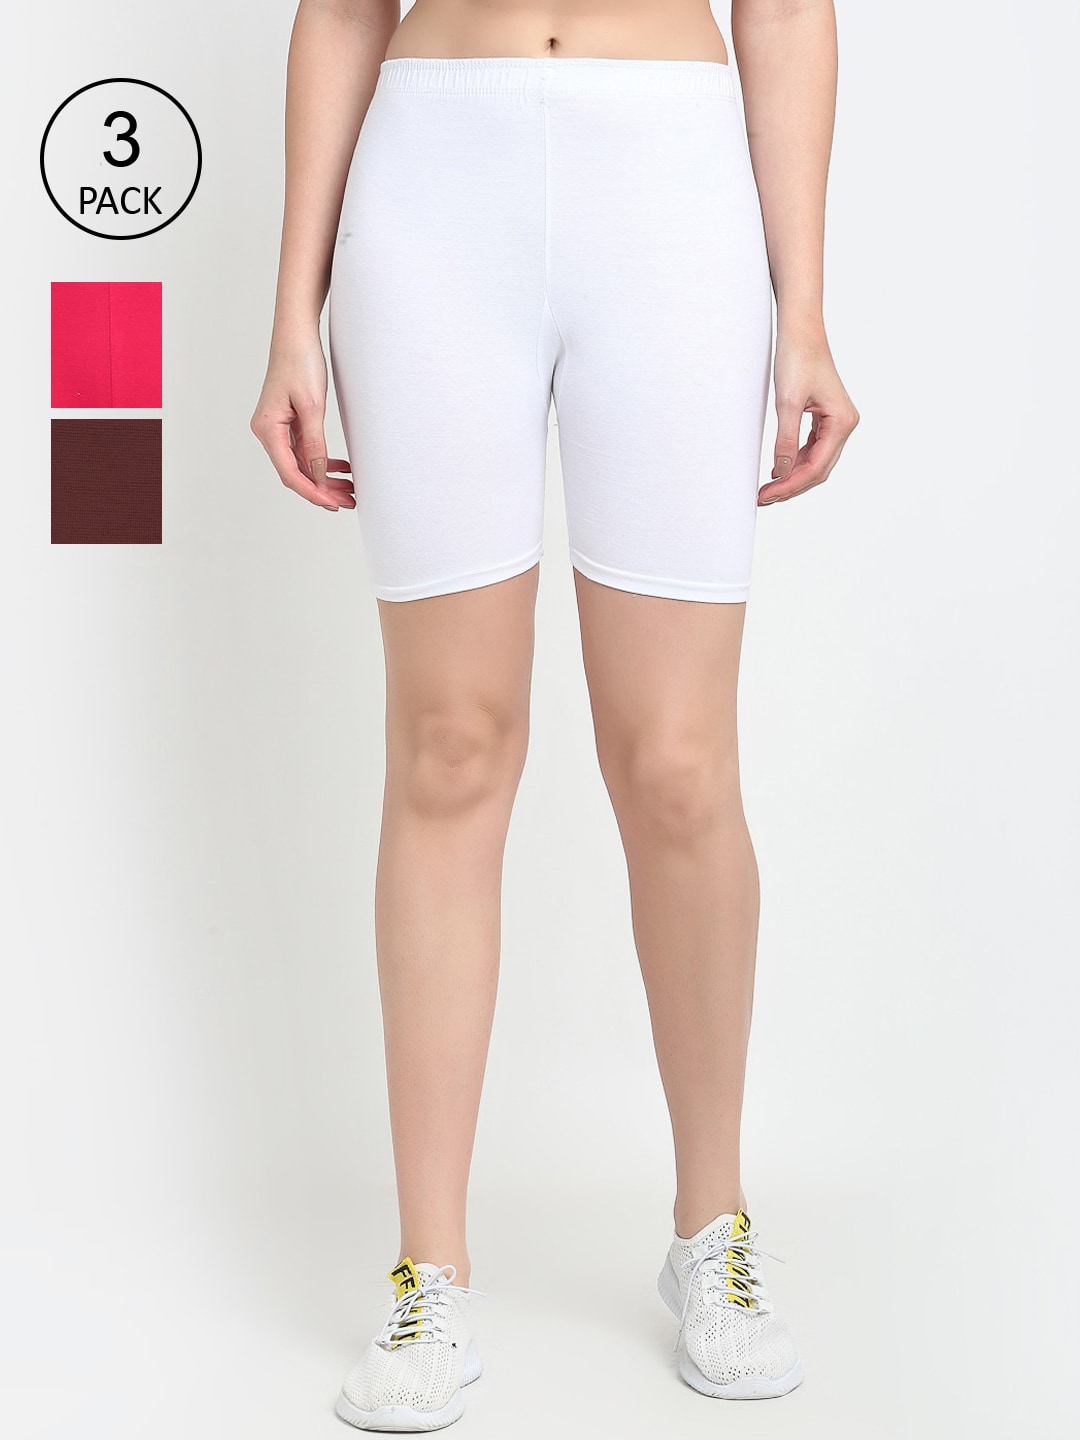 GRACIT Pack-3 Women White Biker Shorts Price in India